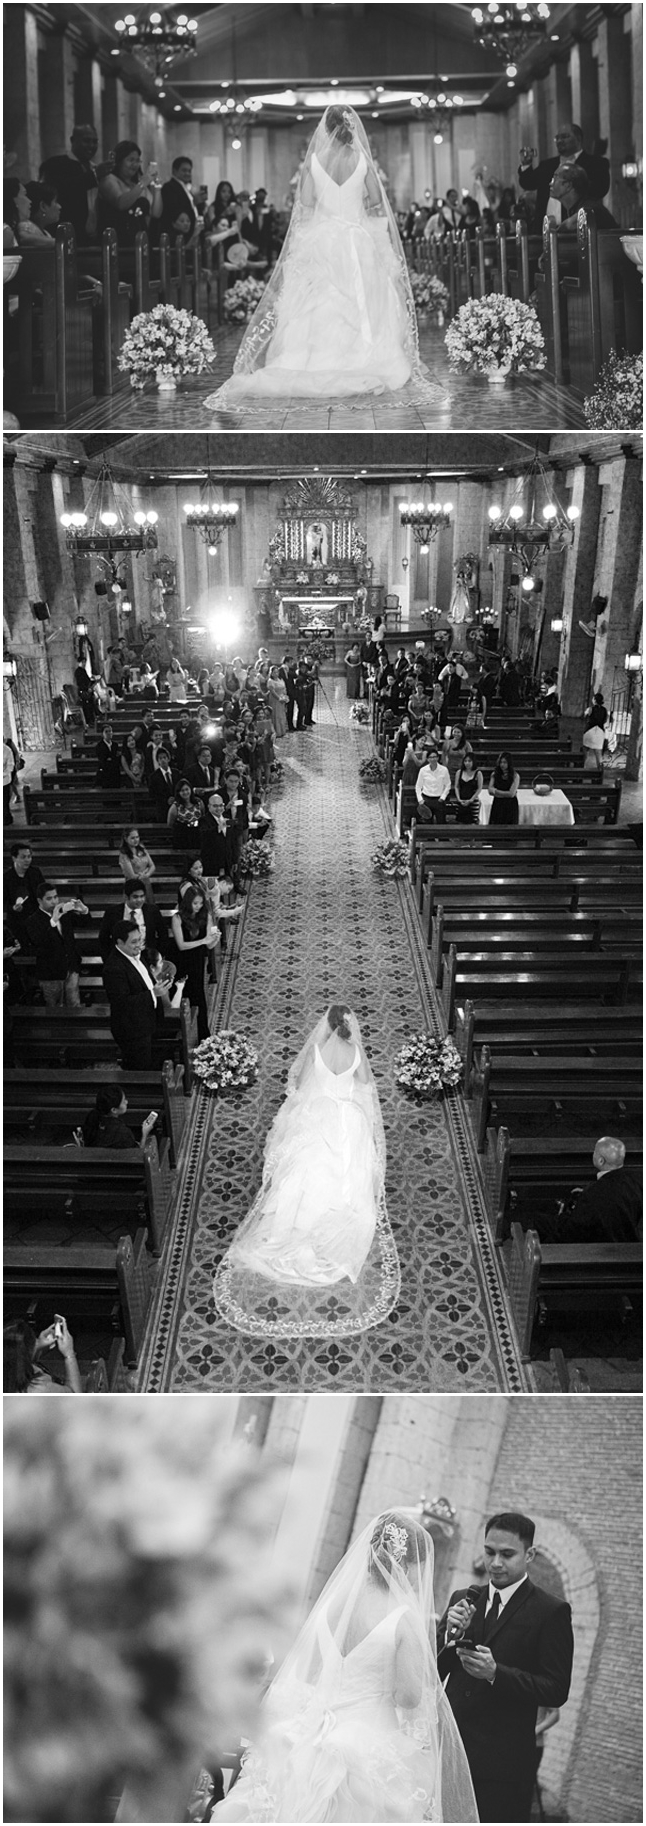 Wedding Philippines - Gold and Black Laguna Wedding by Pol Espino Photography (19)